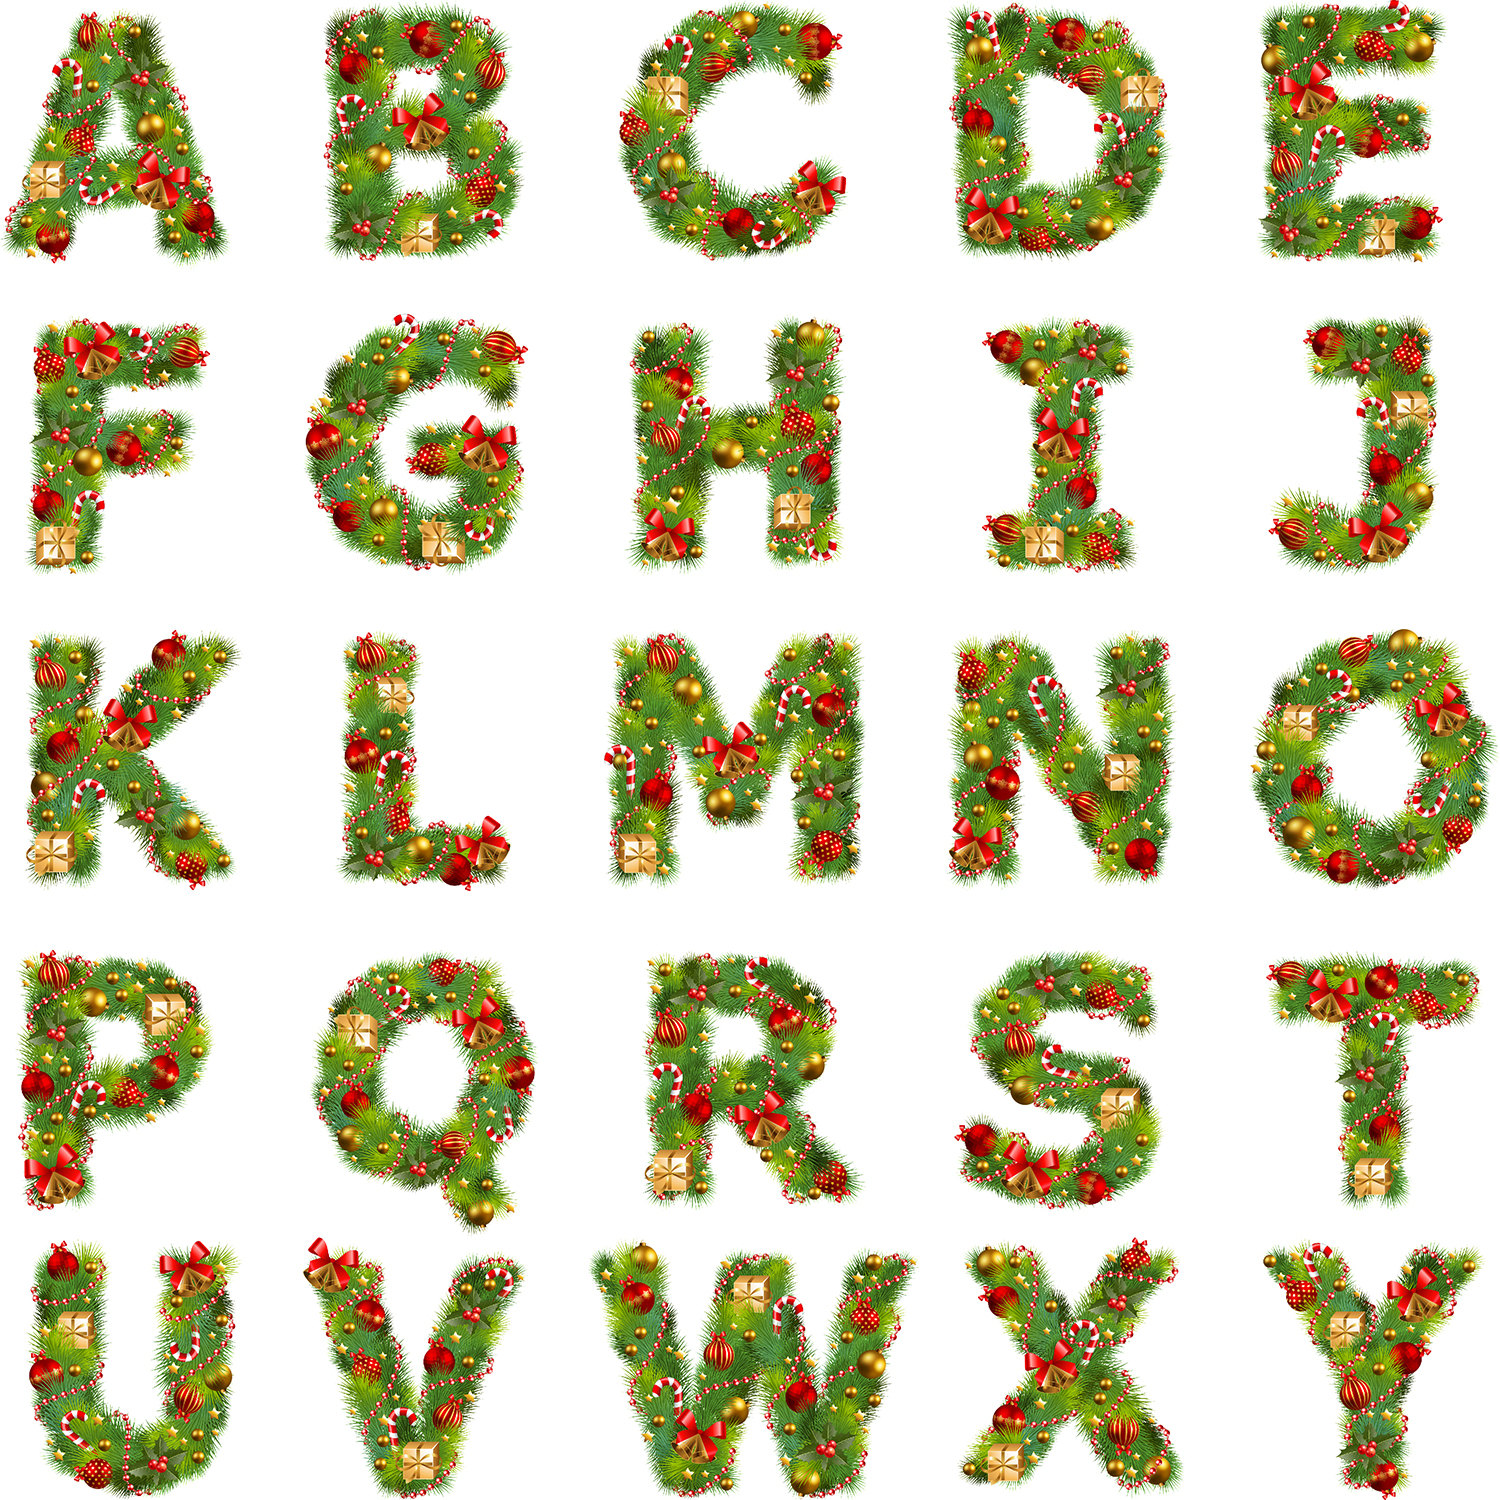 christmas-alphabet-clipart-clipground